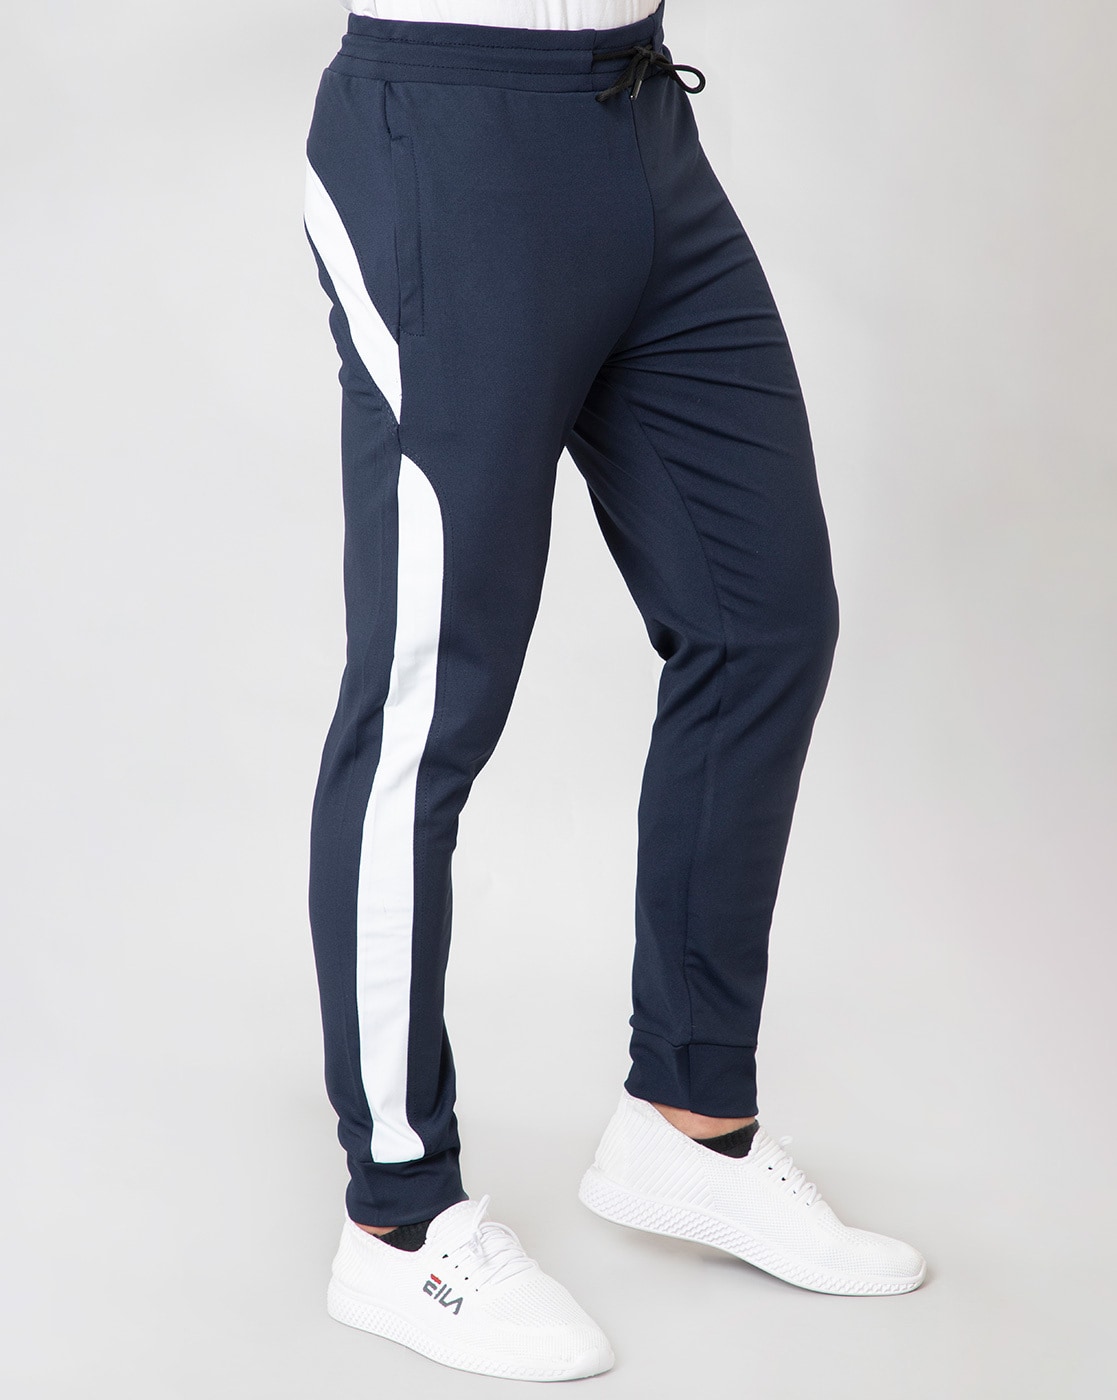 Buy Navy Track Pants for Men by DEVHIM Online